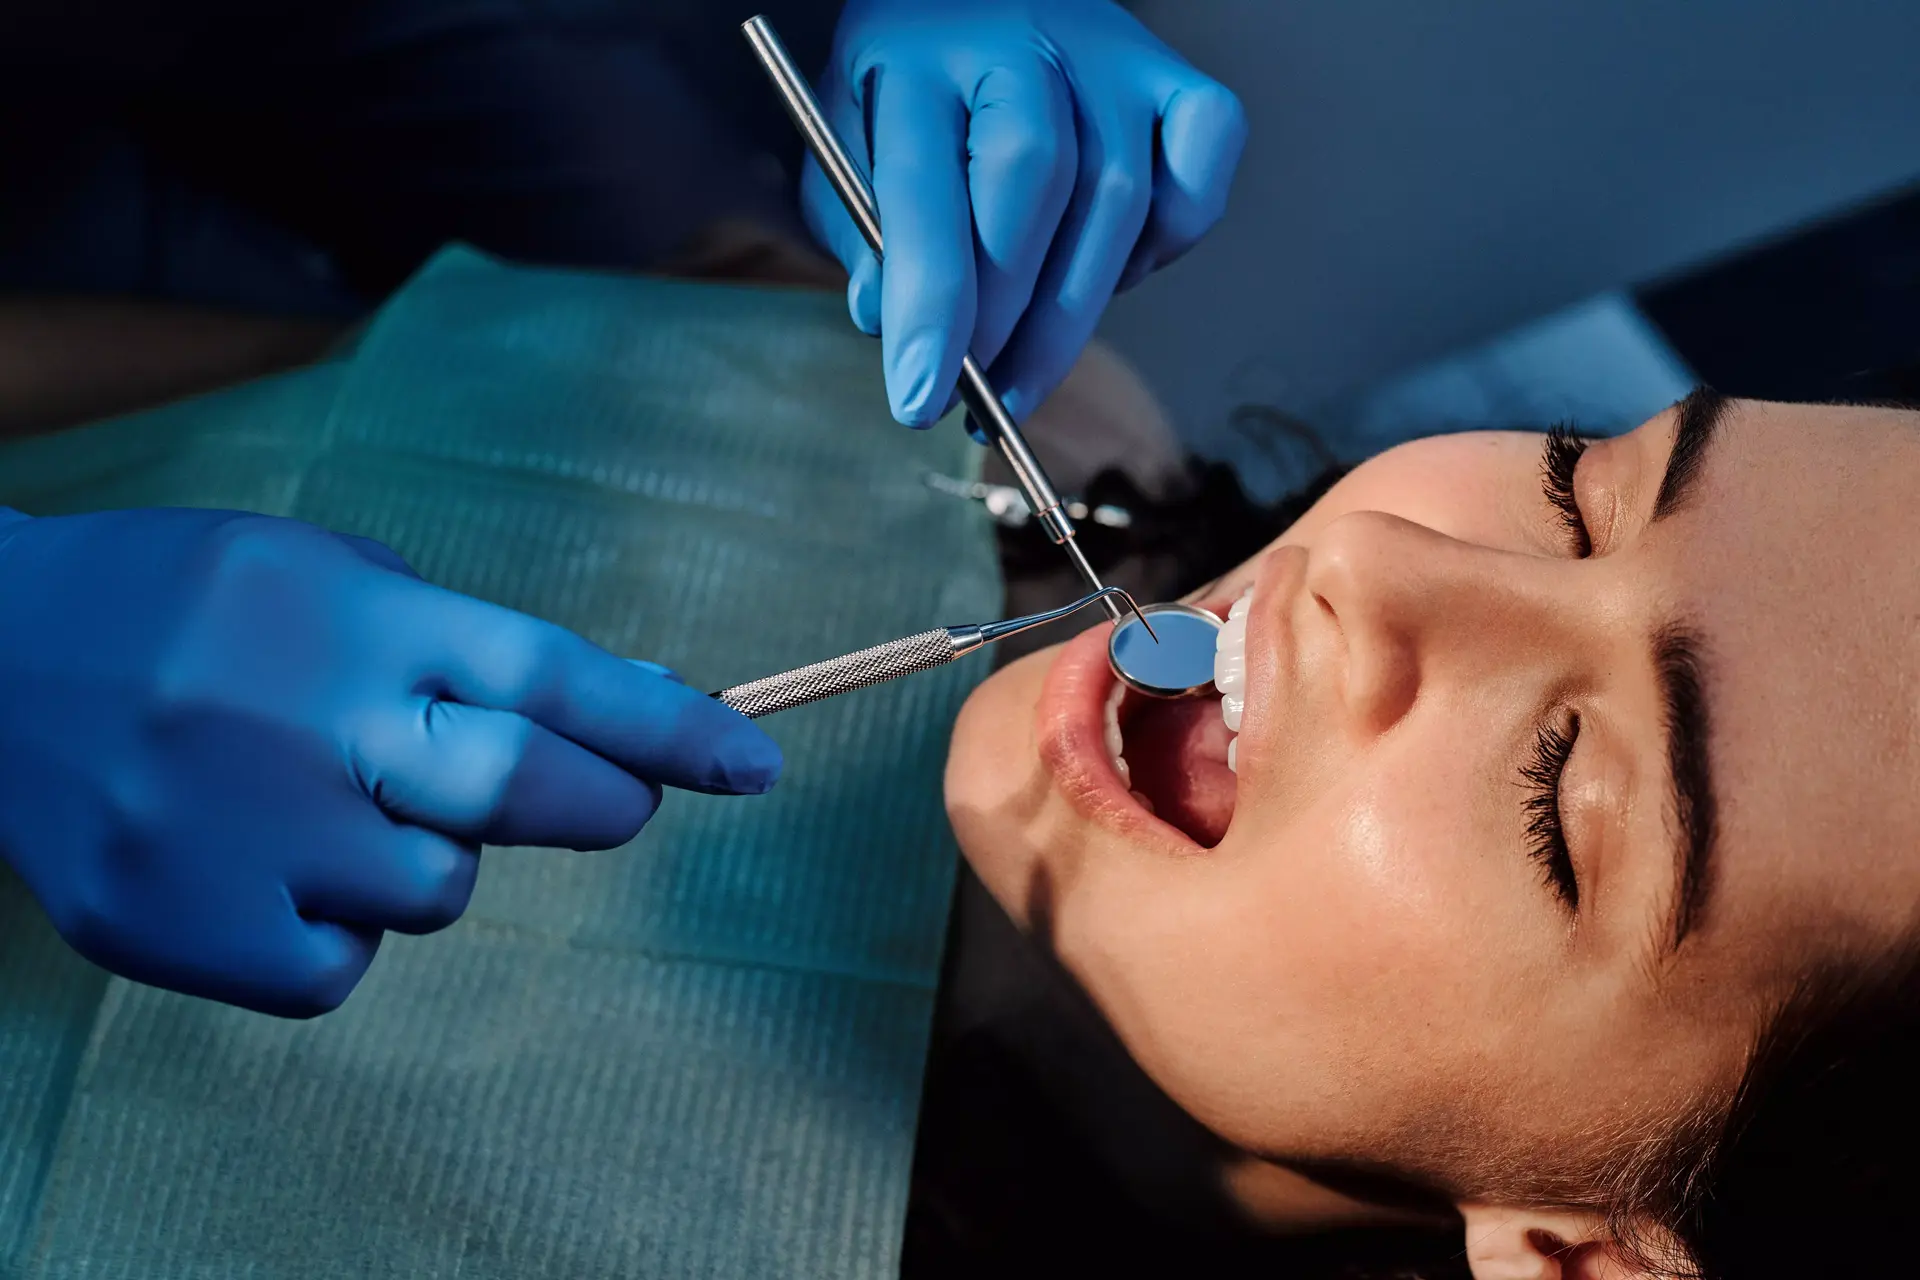 PLEASANT SMILES-Comprehensive Implant & Cosmetic Dentistry Serving The Las Vegas / Henderson Area.